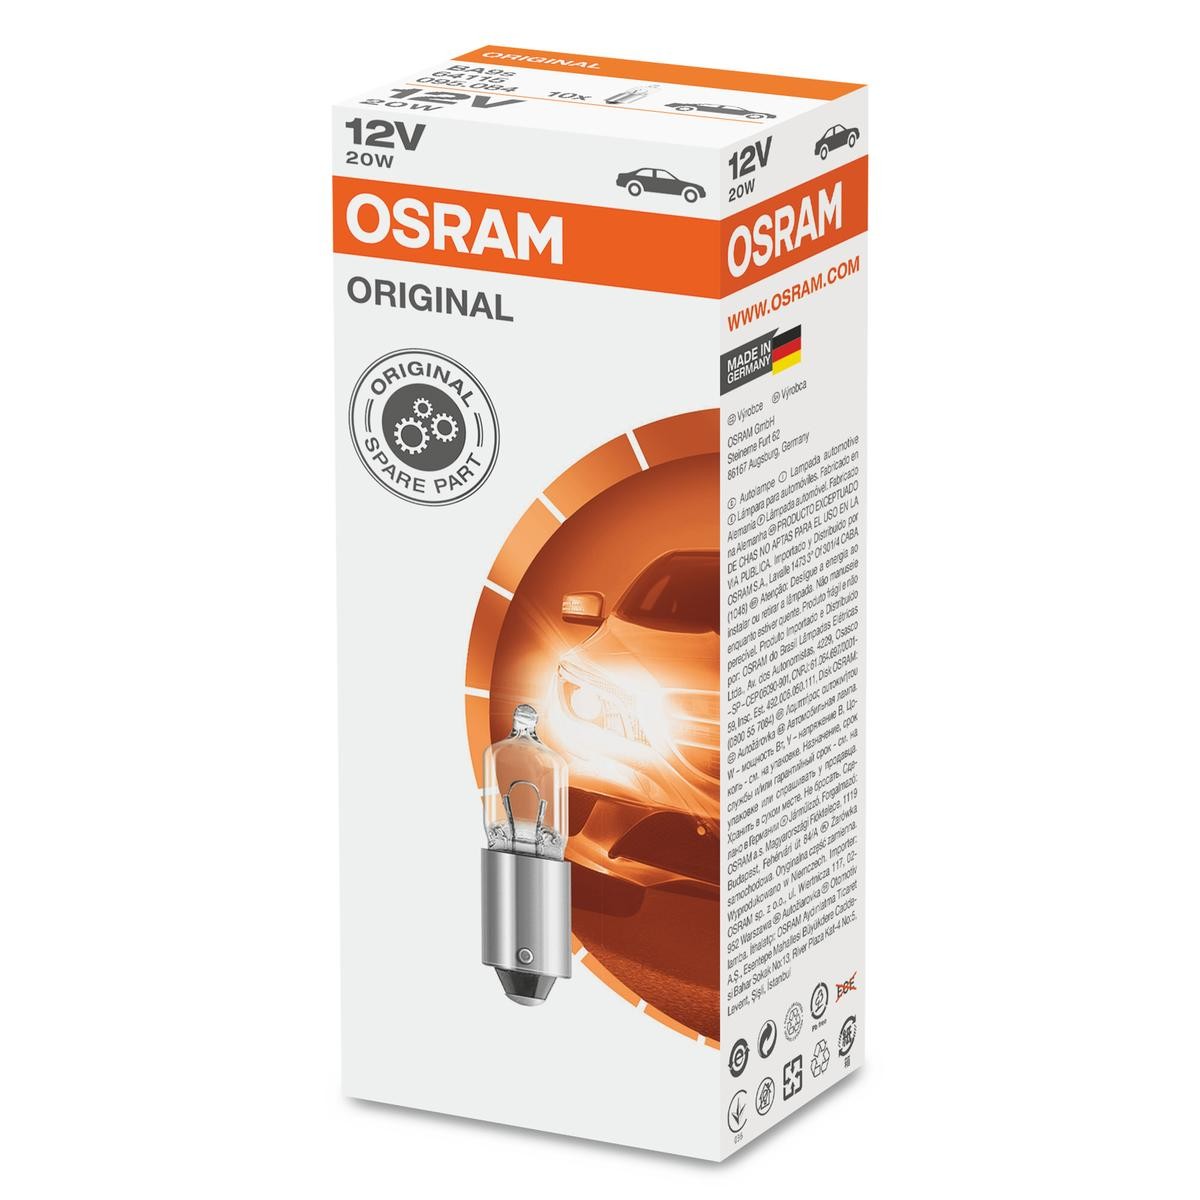 Original 64115 OSRAM Interior lights experience and price